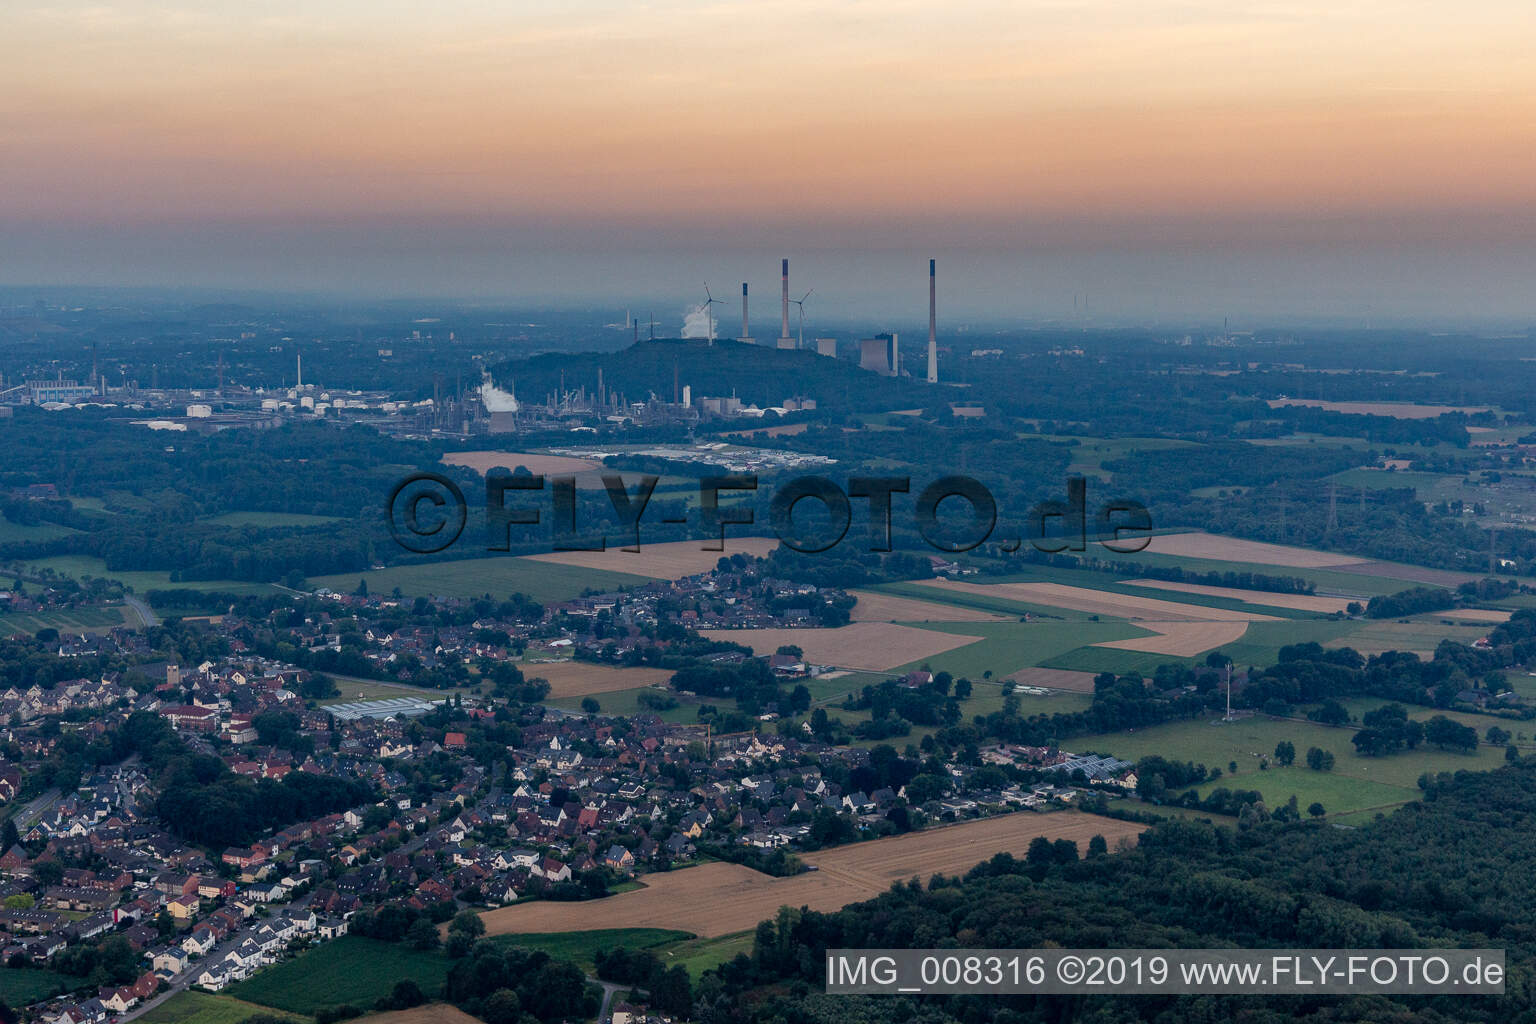 Ruhr Oel GmbH, Halde Oberscholven wind farm, Uniper power plants in Gelsenkirchen in the state North Rhine-Westphalia, Germany